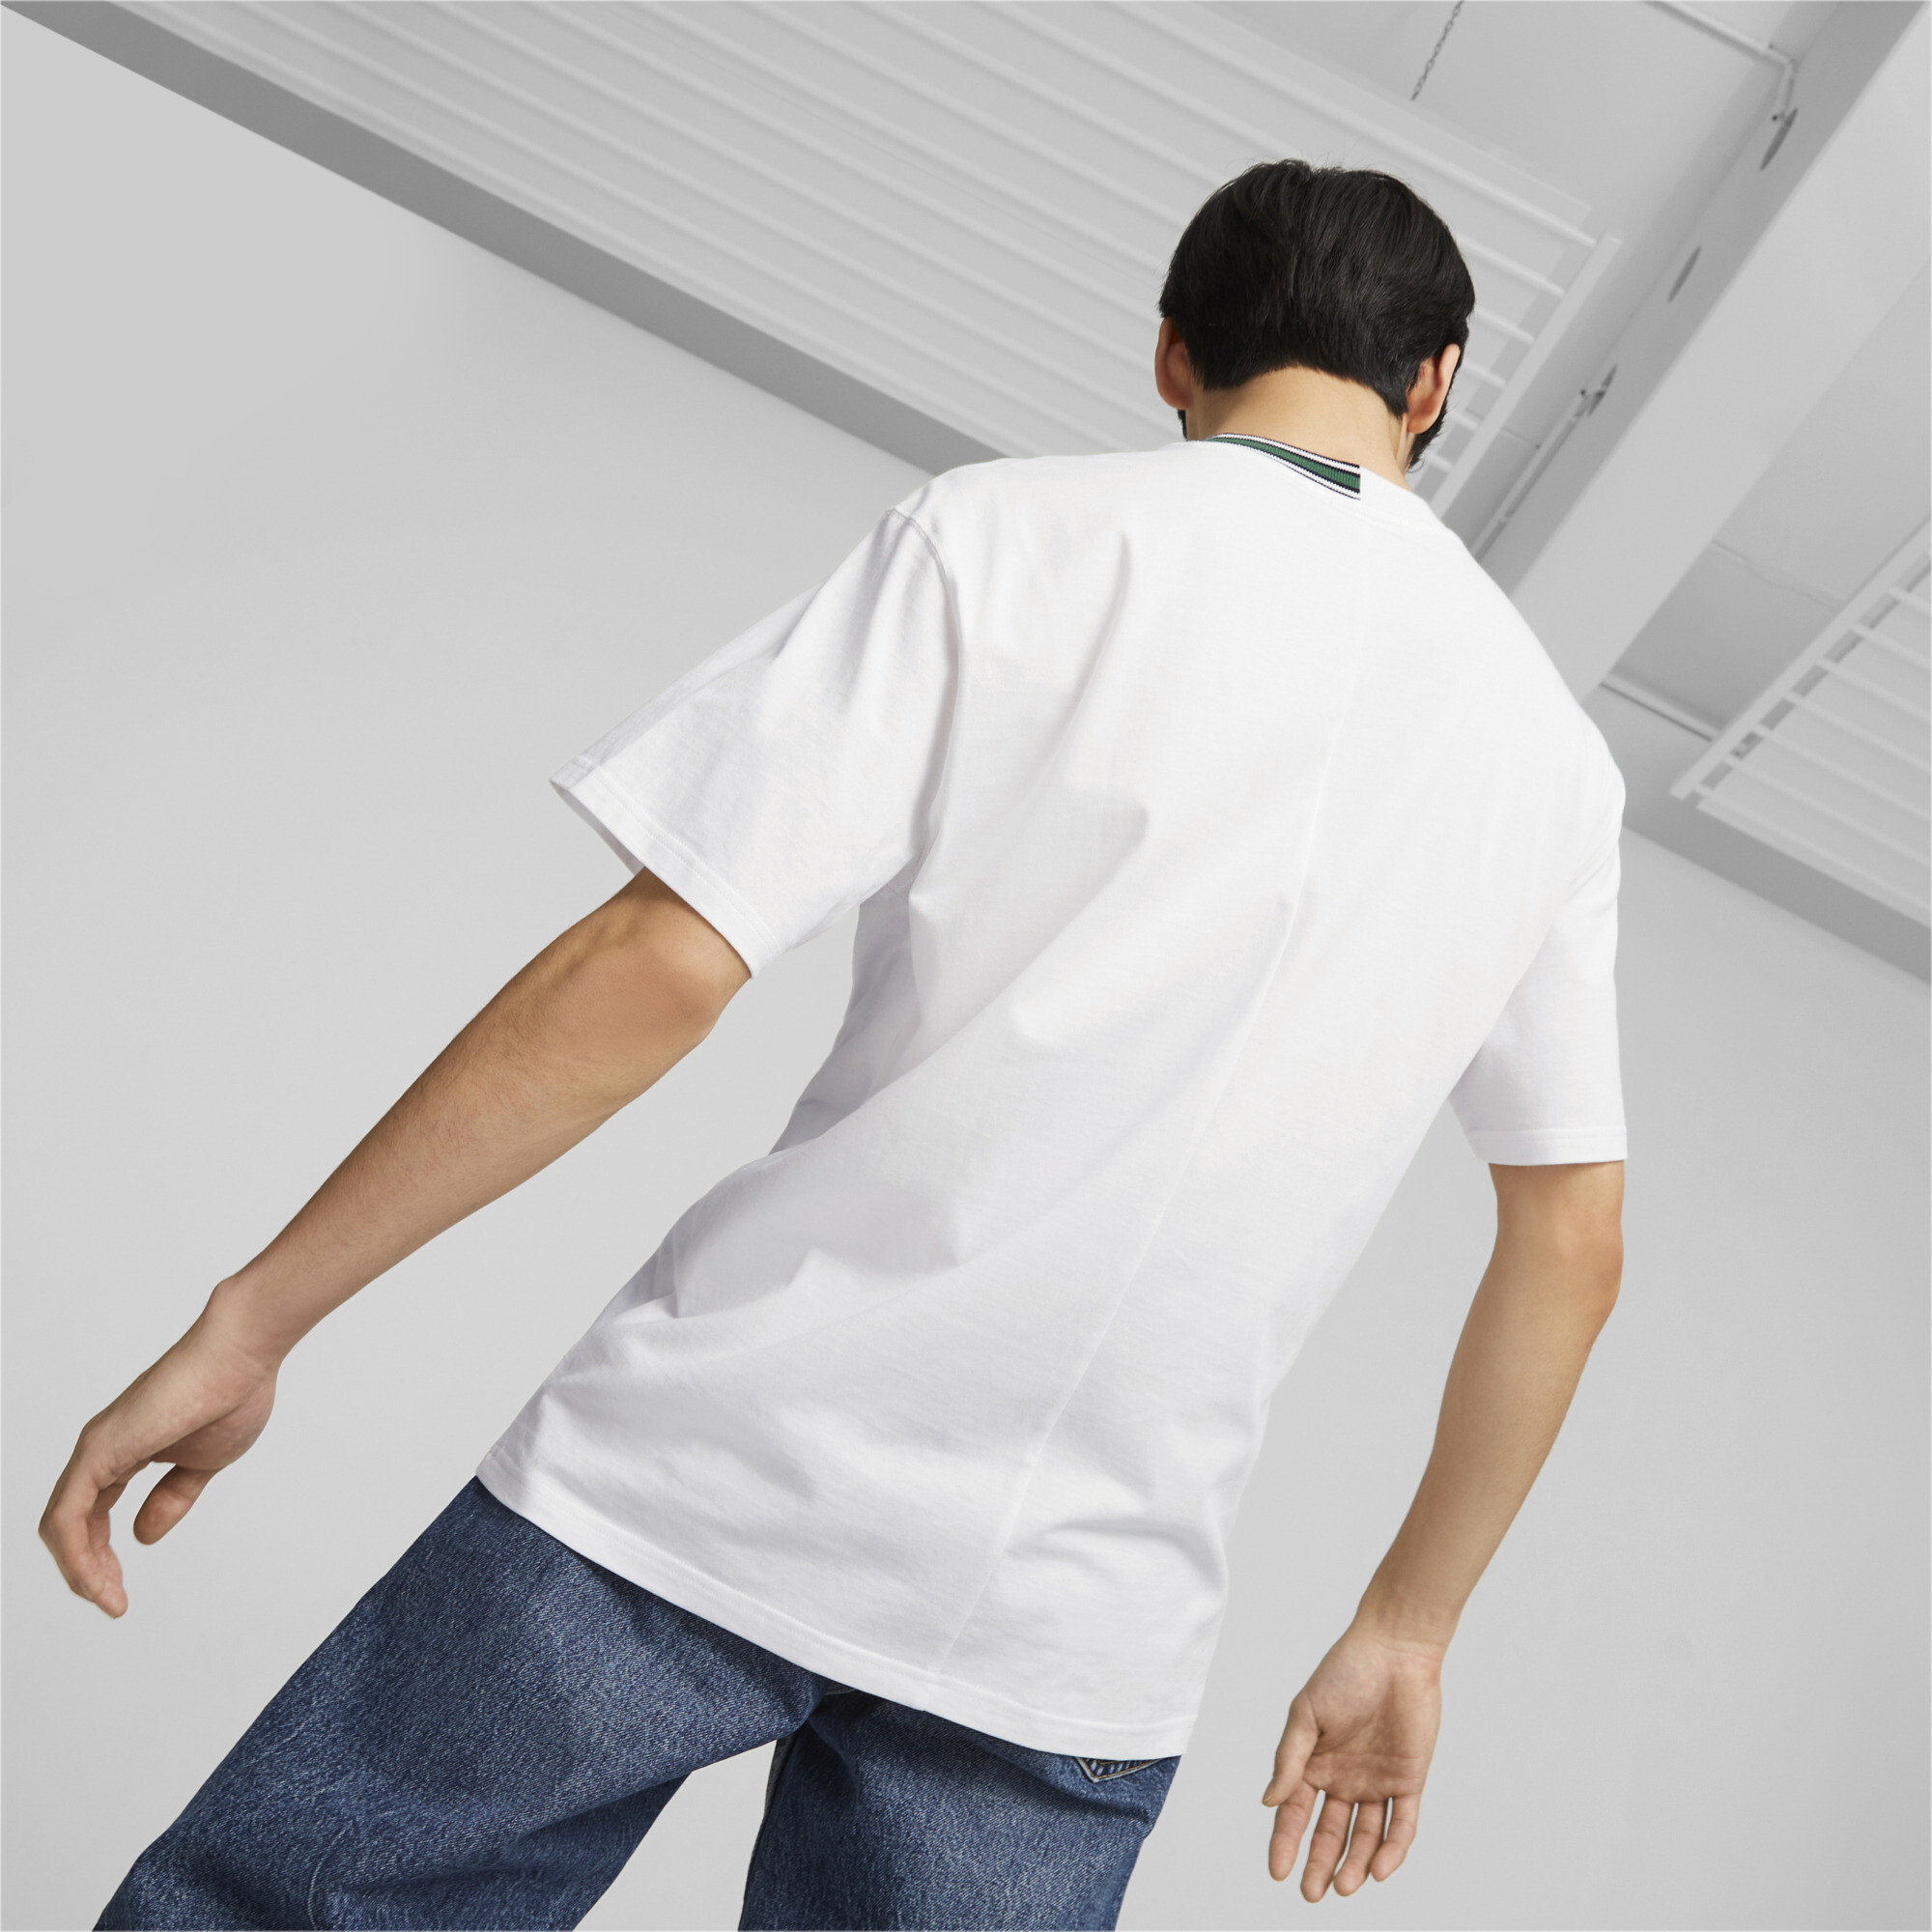 Men's Puma Classics T-Shirt, White, Size XS, Lifestyle